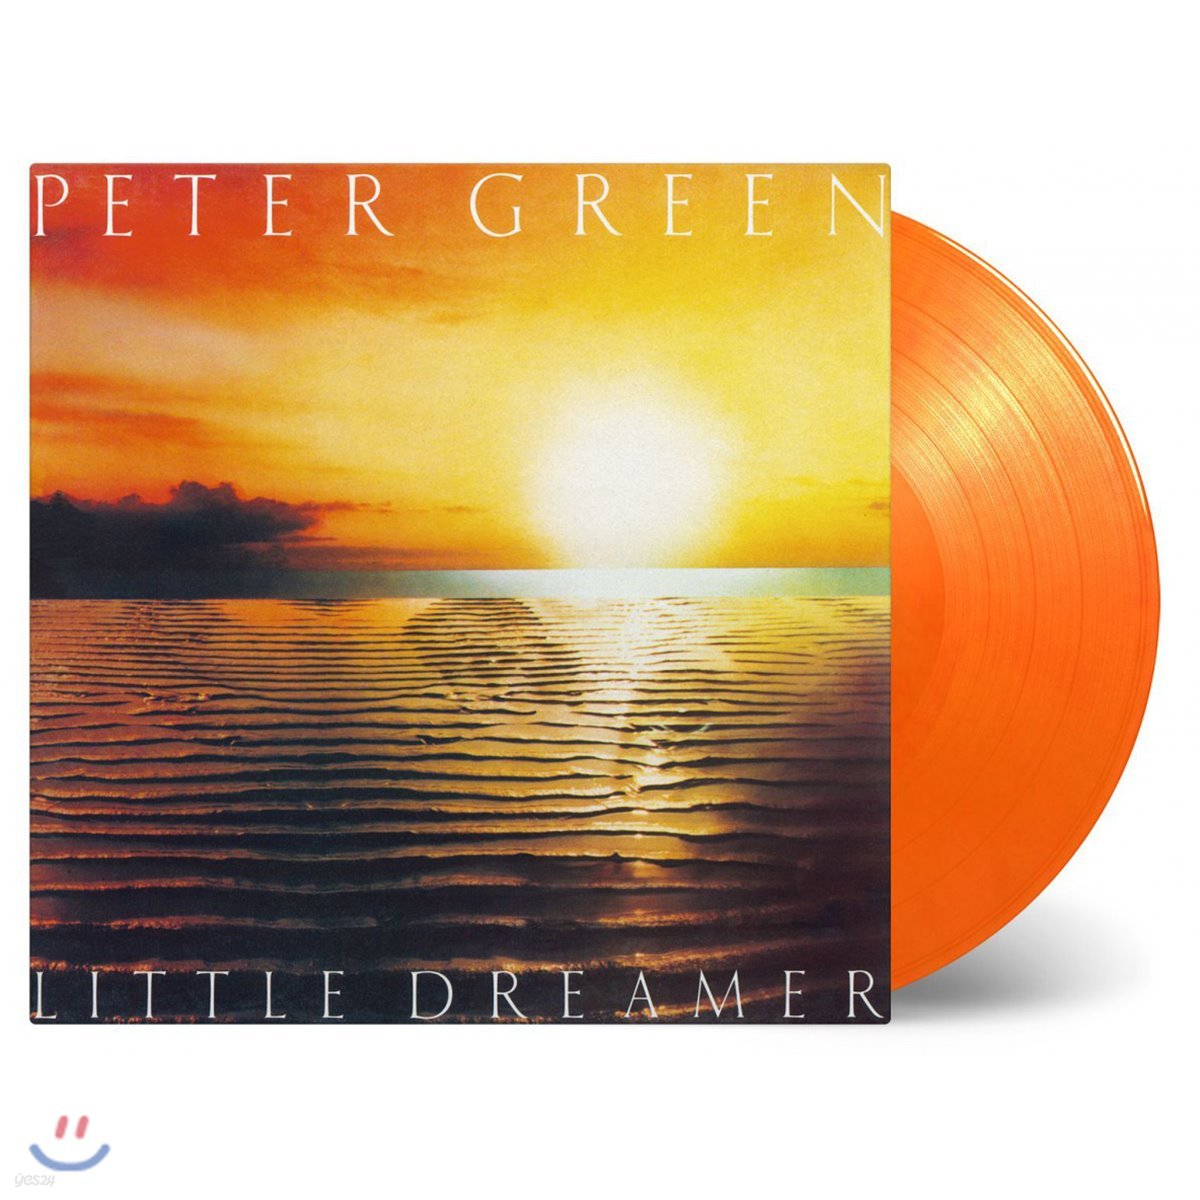 Peter Green (피터 그린) - Little Dreamer [오렌지 컬러 LP]